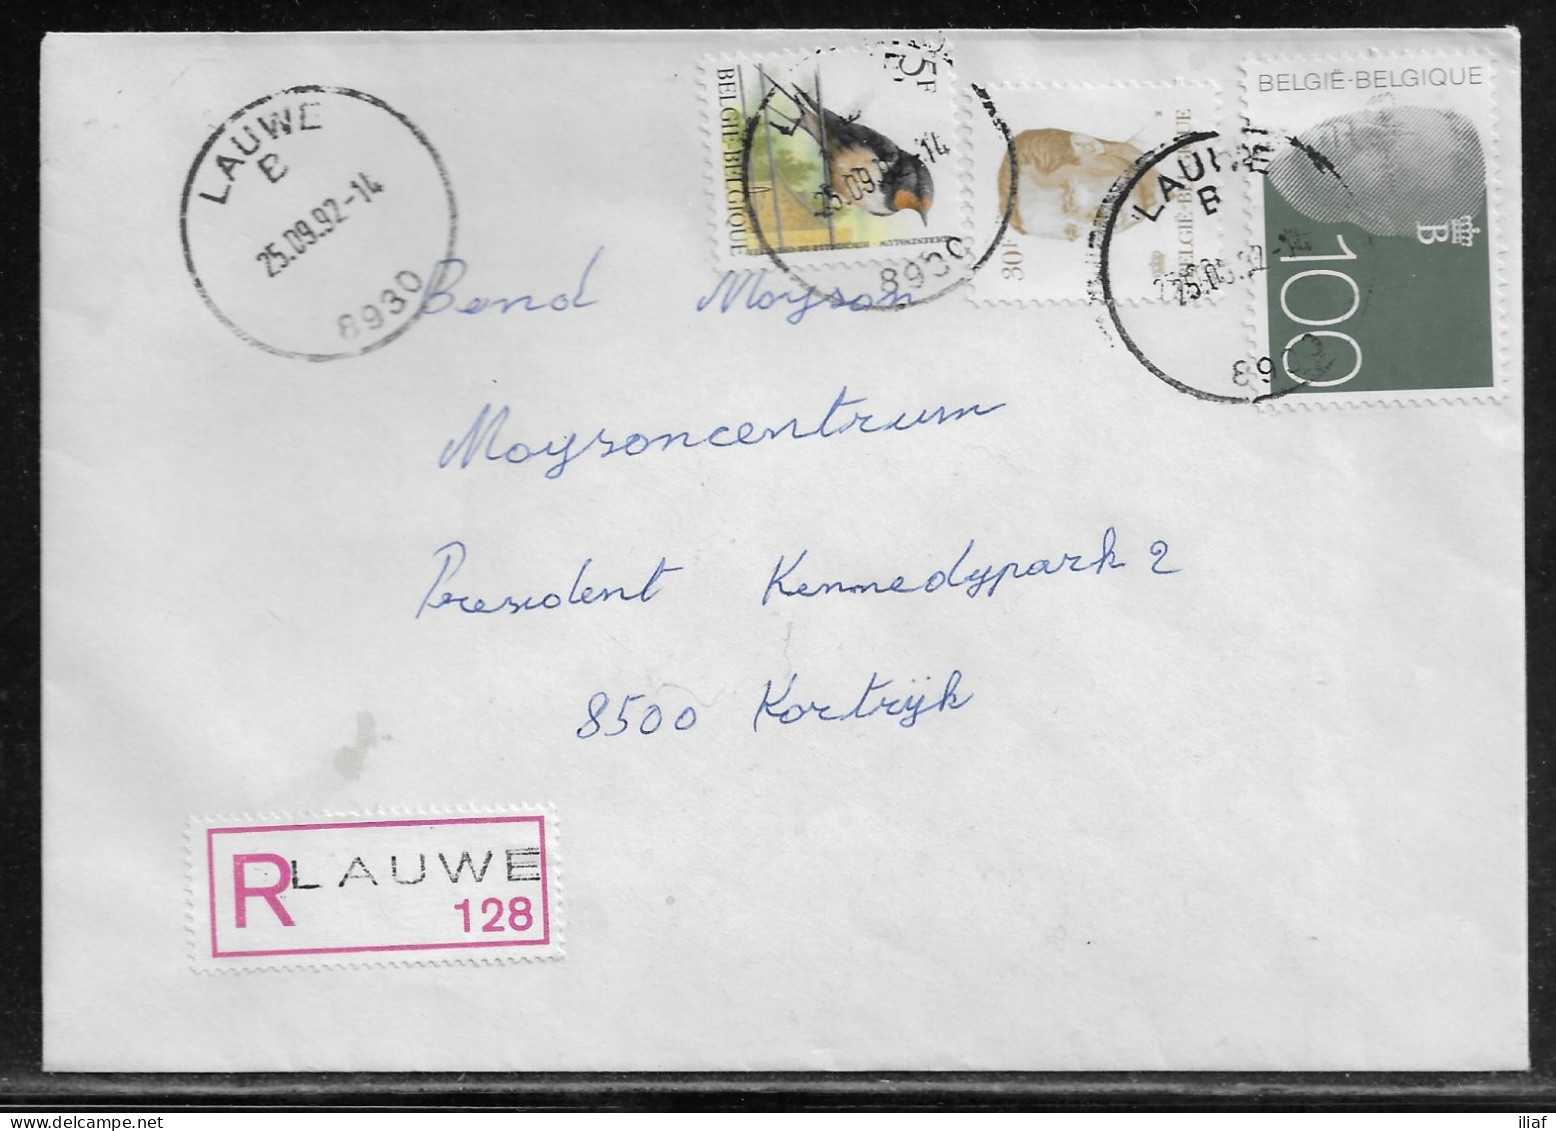 Belgium. Stamps Mi. 2527, Mi. 2533, Mi. 2212 On Registered Letter Sent From Lauwe On 25.09.1992 For Kortrijk. - Storia Postale